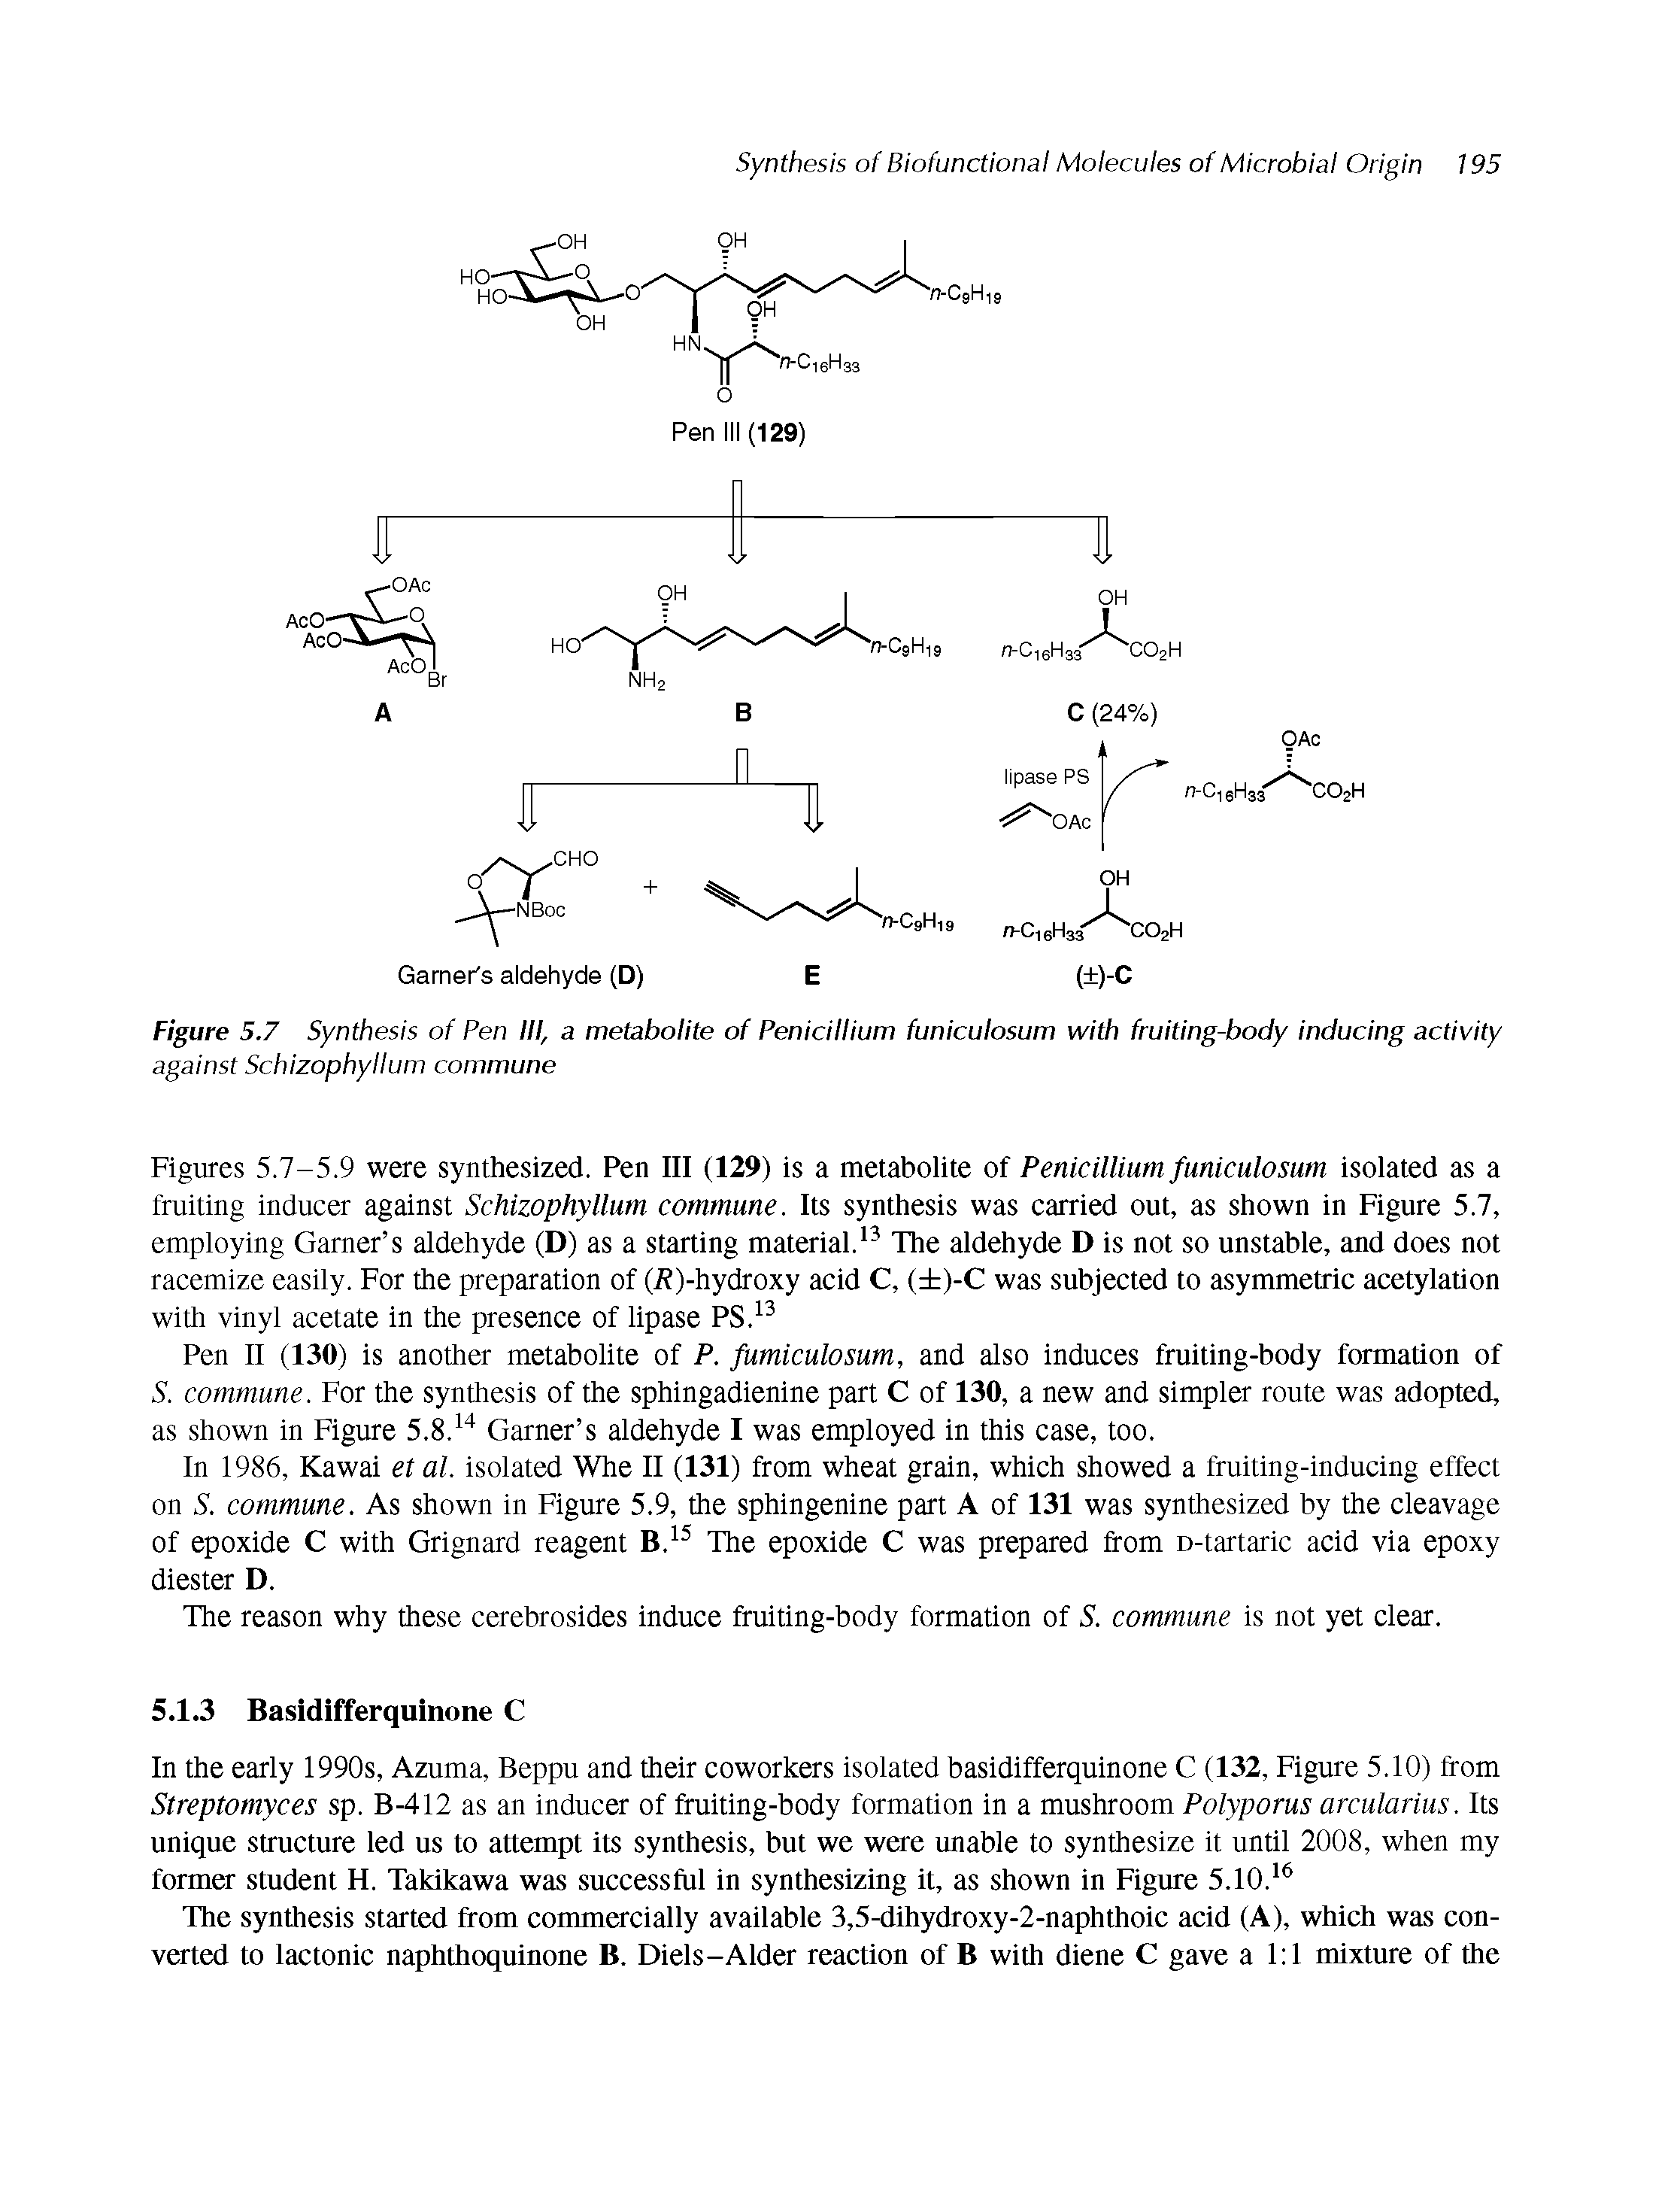 Figure 5.7 Synthesis of Pen III, a metabolite of Penicillium funiculosum with fruiting-body inducing activity against Schizophyllum commune...